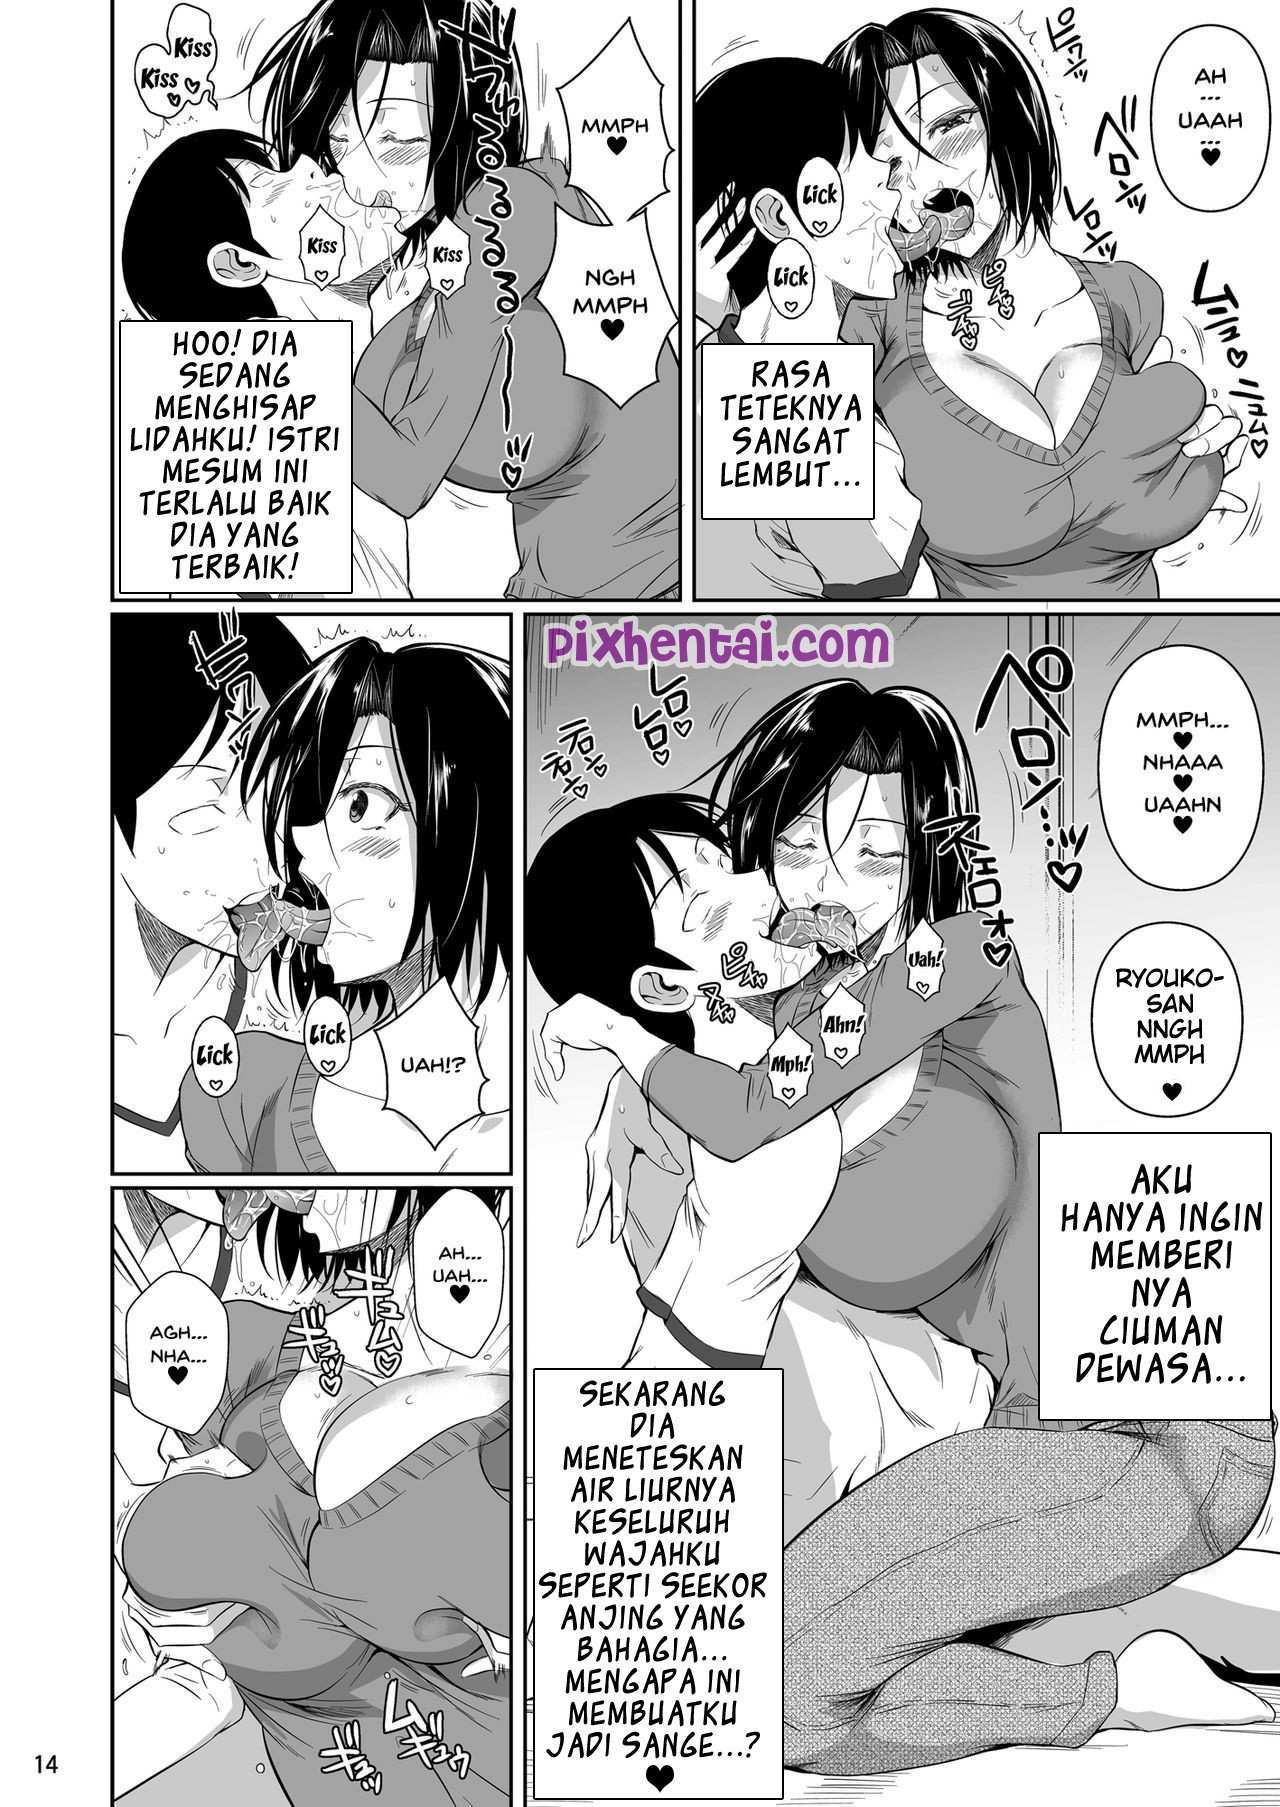 Komik hentai xxx manga sex bokep hamili istri bos yang bohay 14